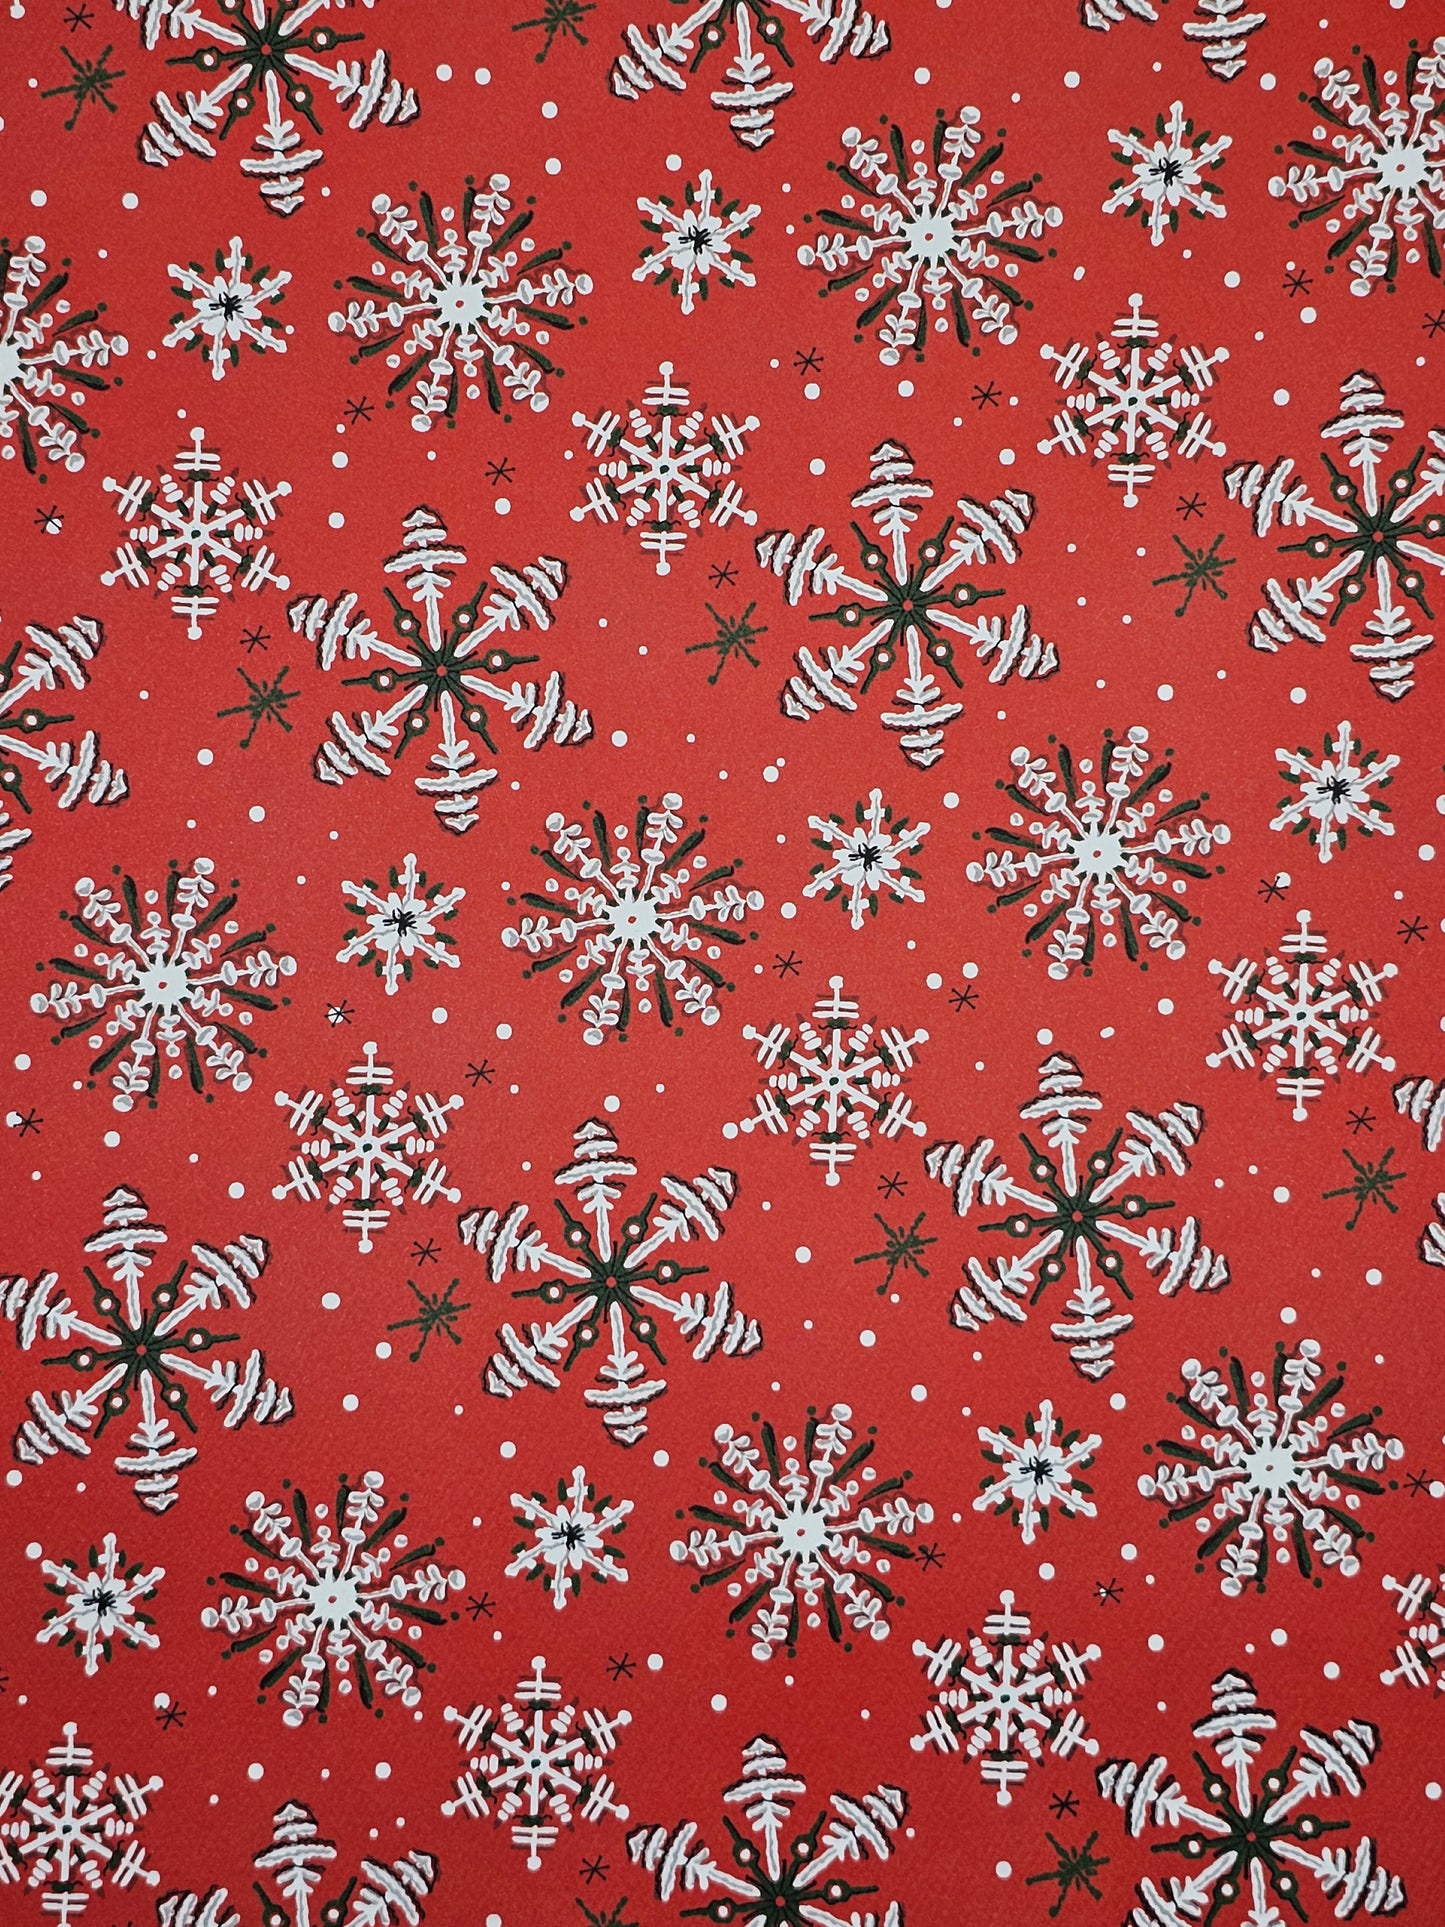 Christmas Snow (Carta Bella's "Merry Christmas" Collection) -12x12 Sheet